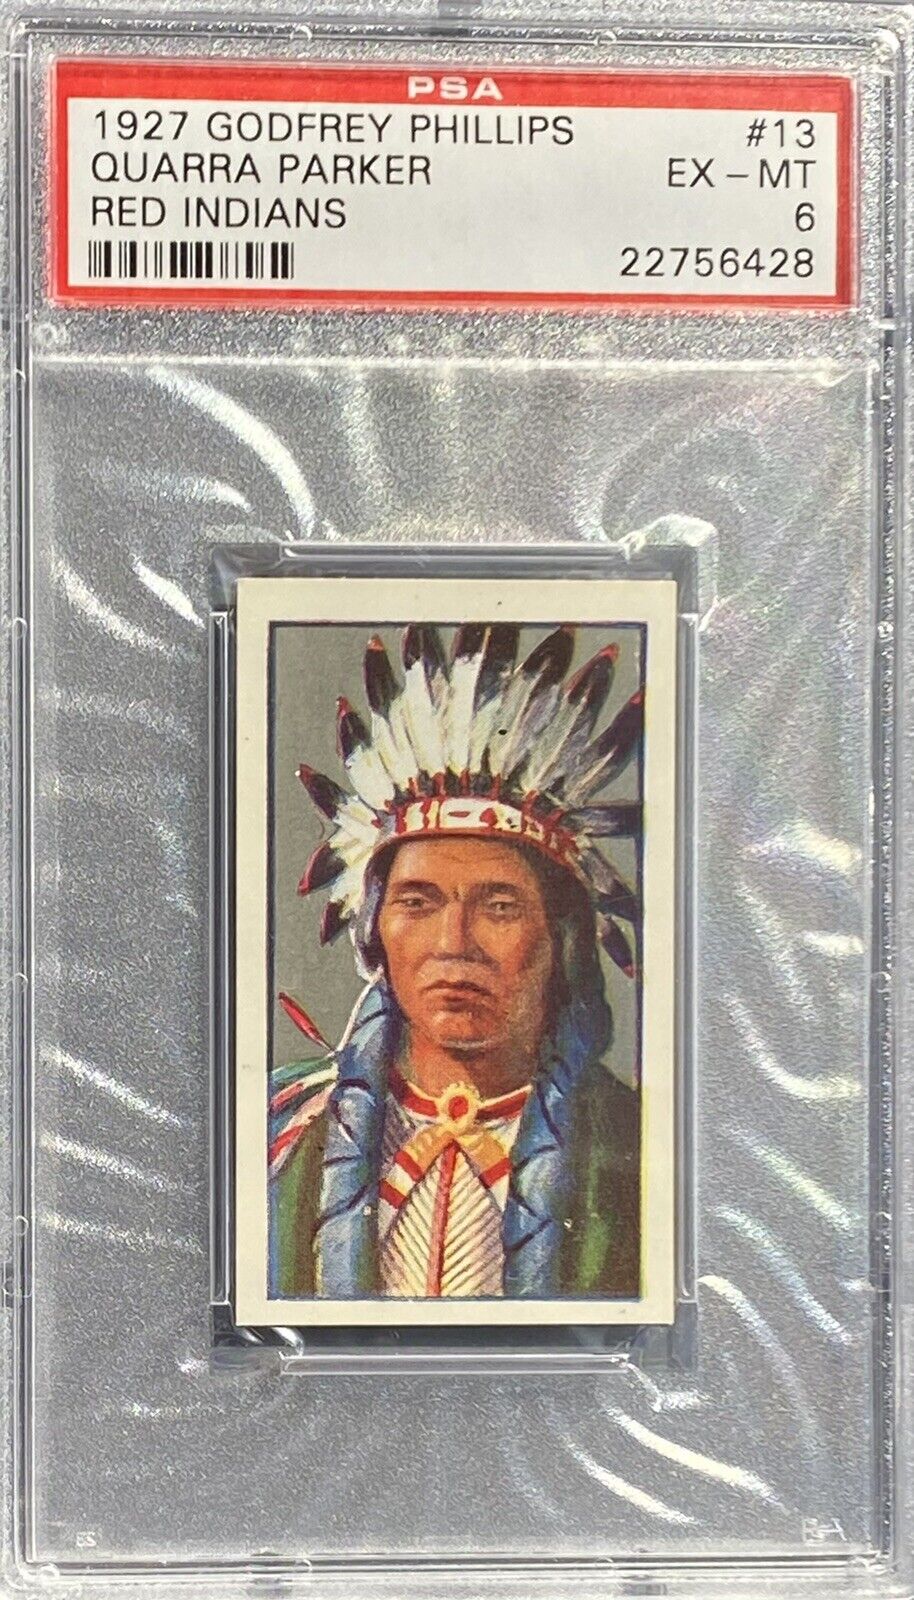 1927 Godfrey Phillips Red Indians #13 QUARRA PARKER - PSA 6 EX-MT